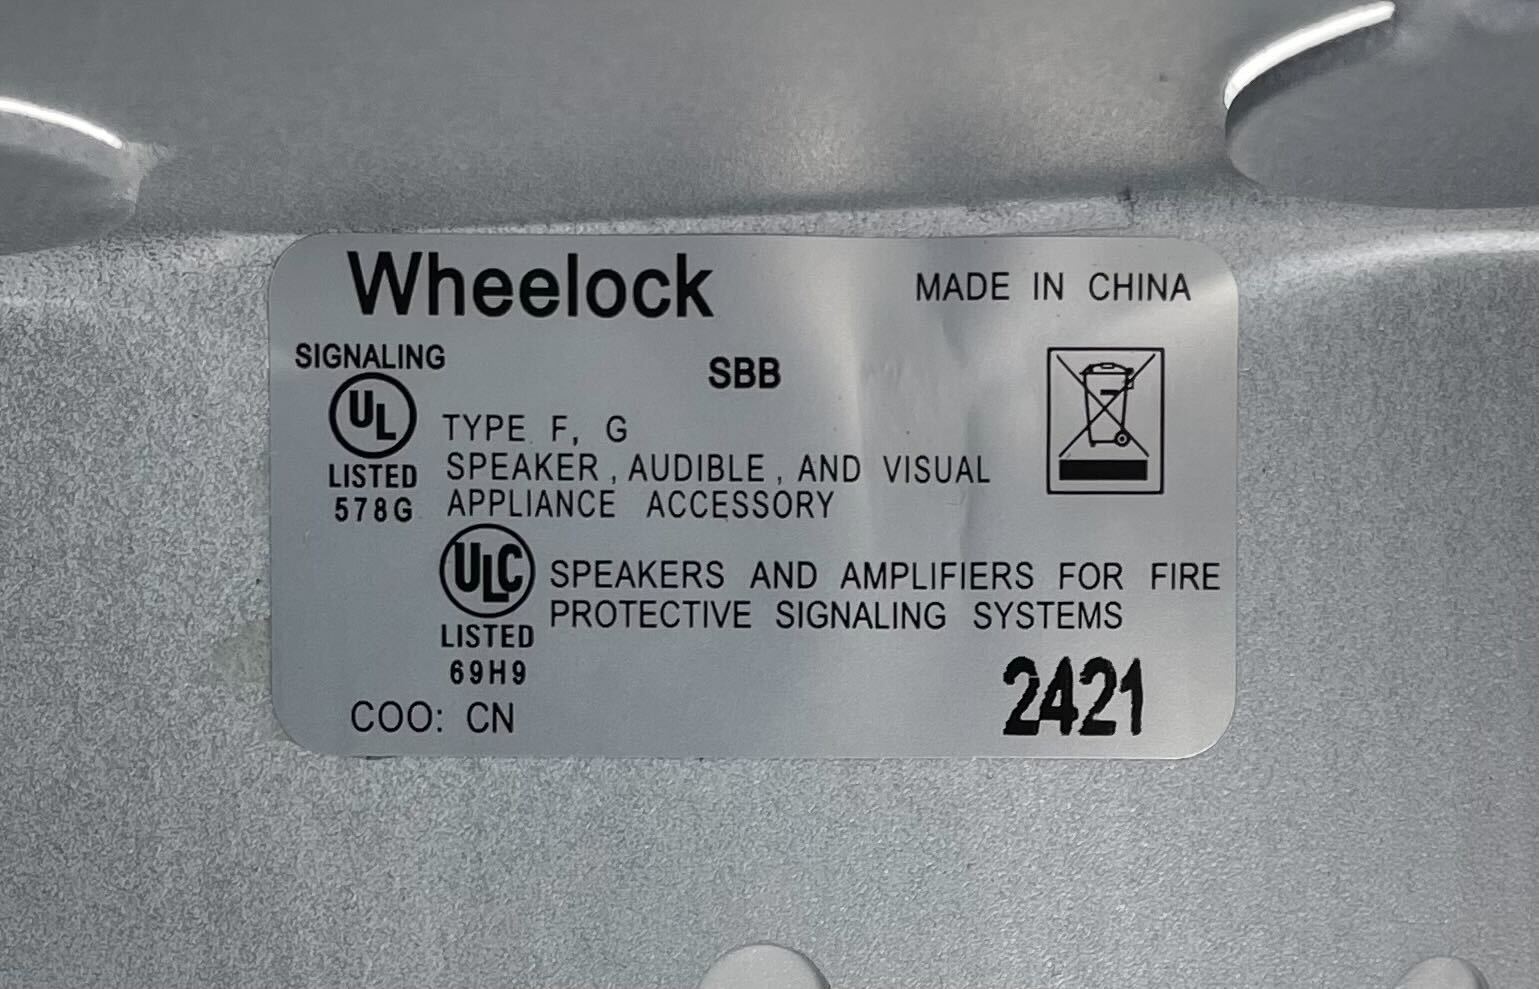 Wheelock SBB-W - The Fire Alarm Supplier